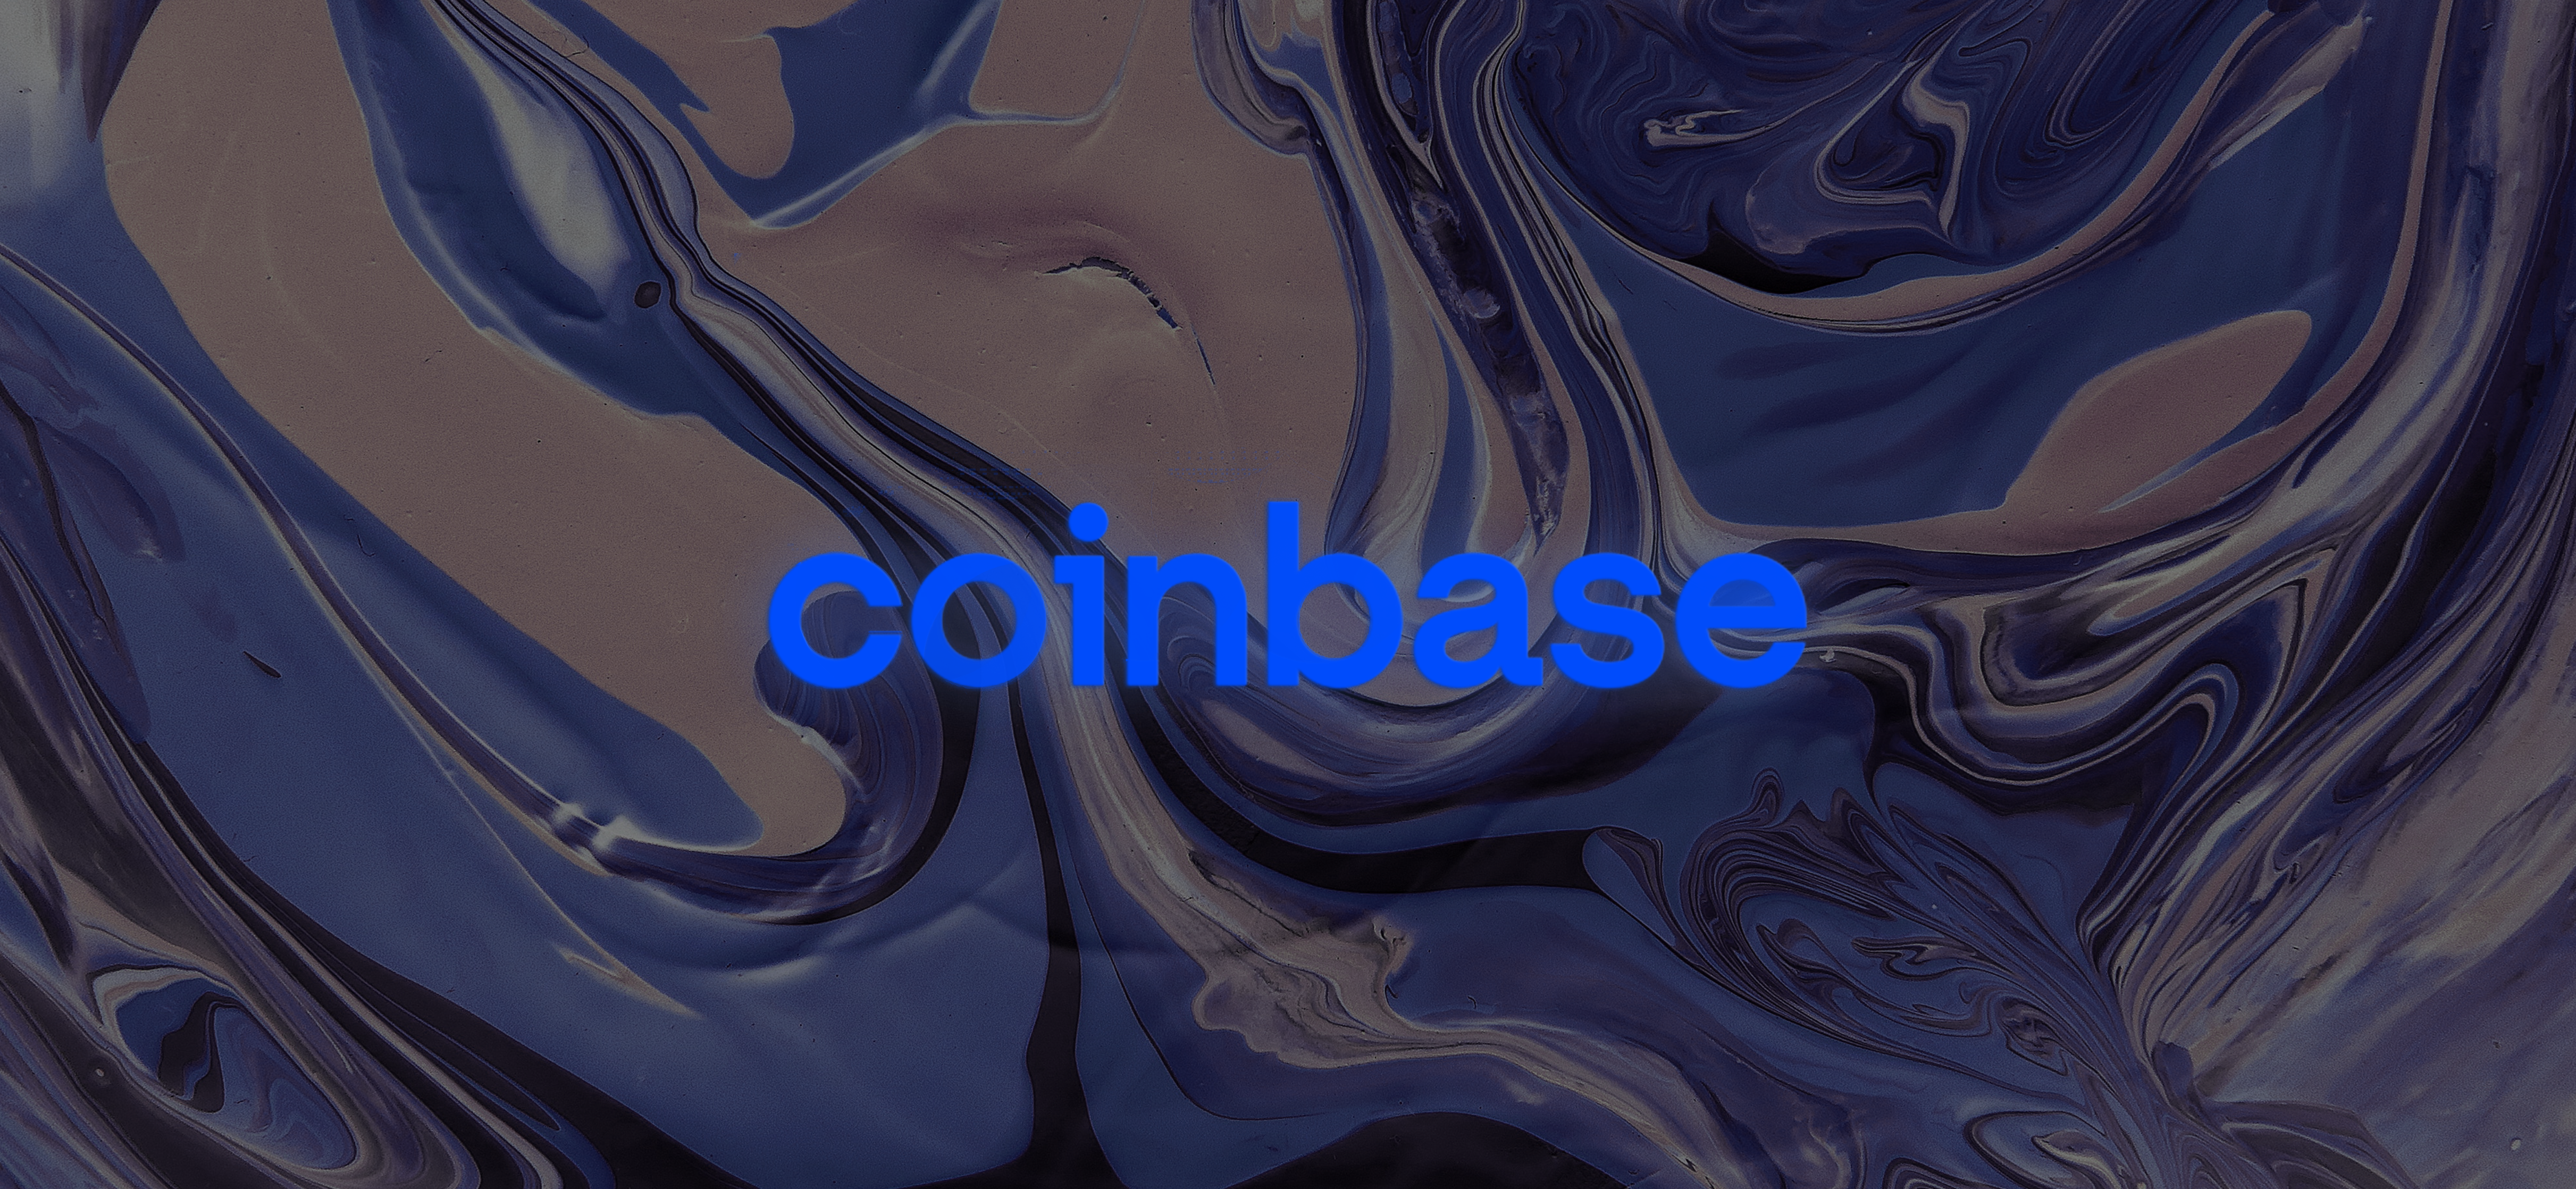 Exchange, Coinbase exchange, crypto